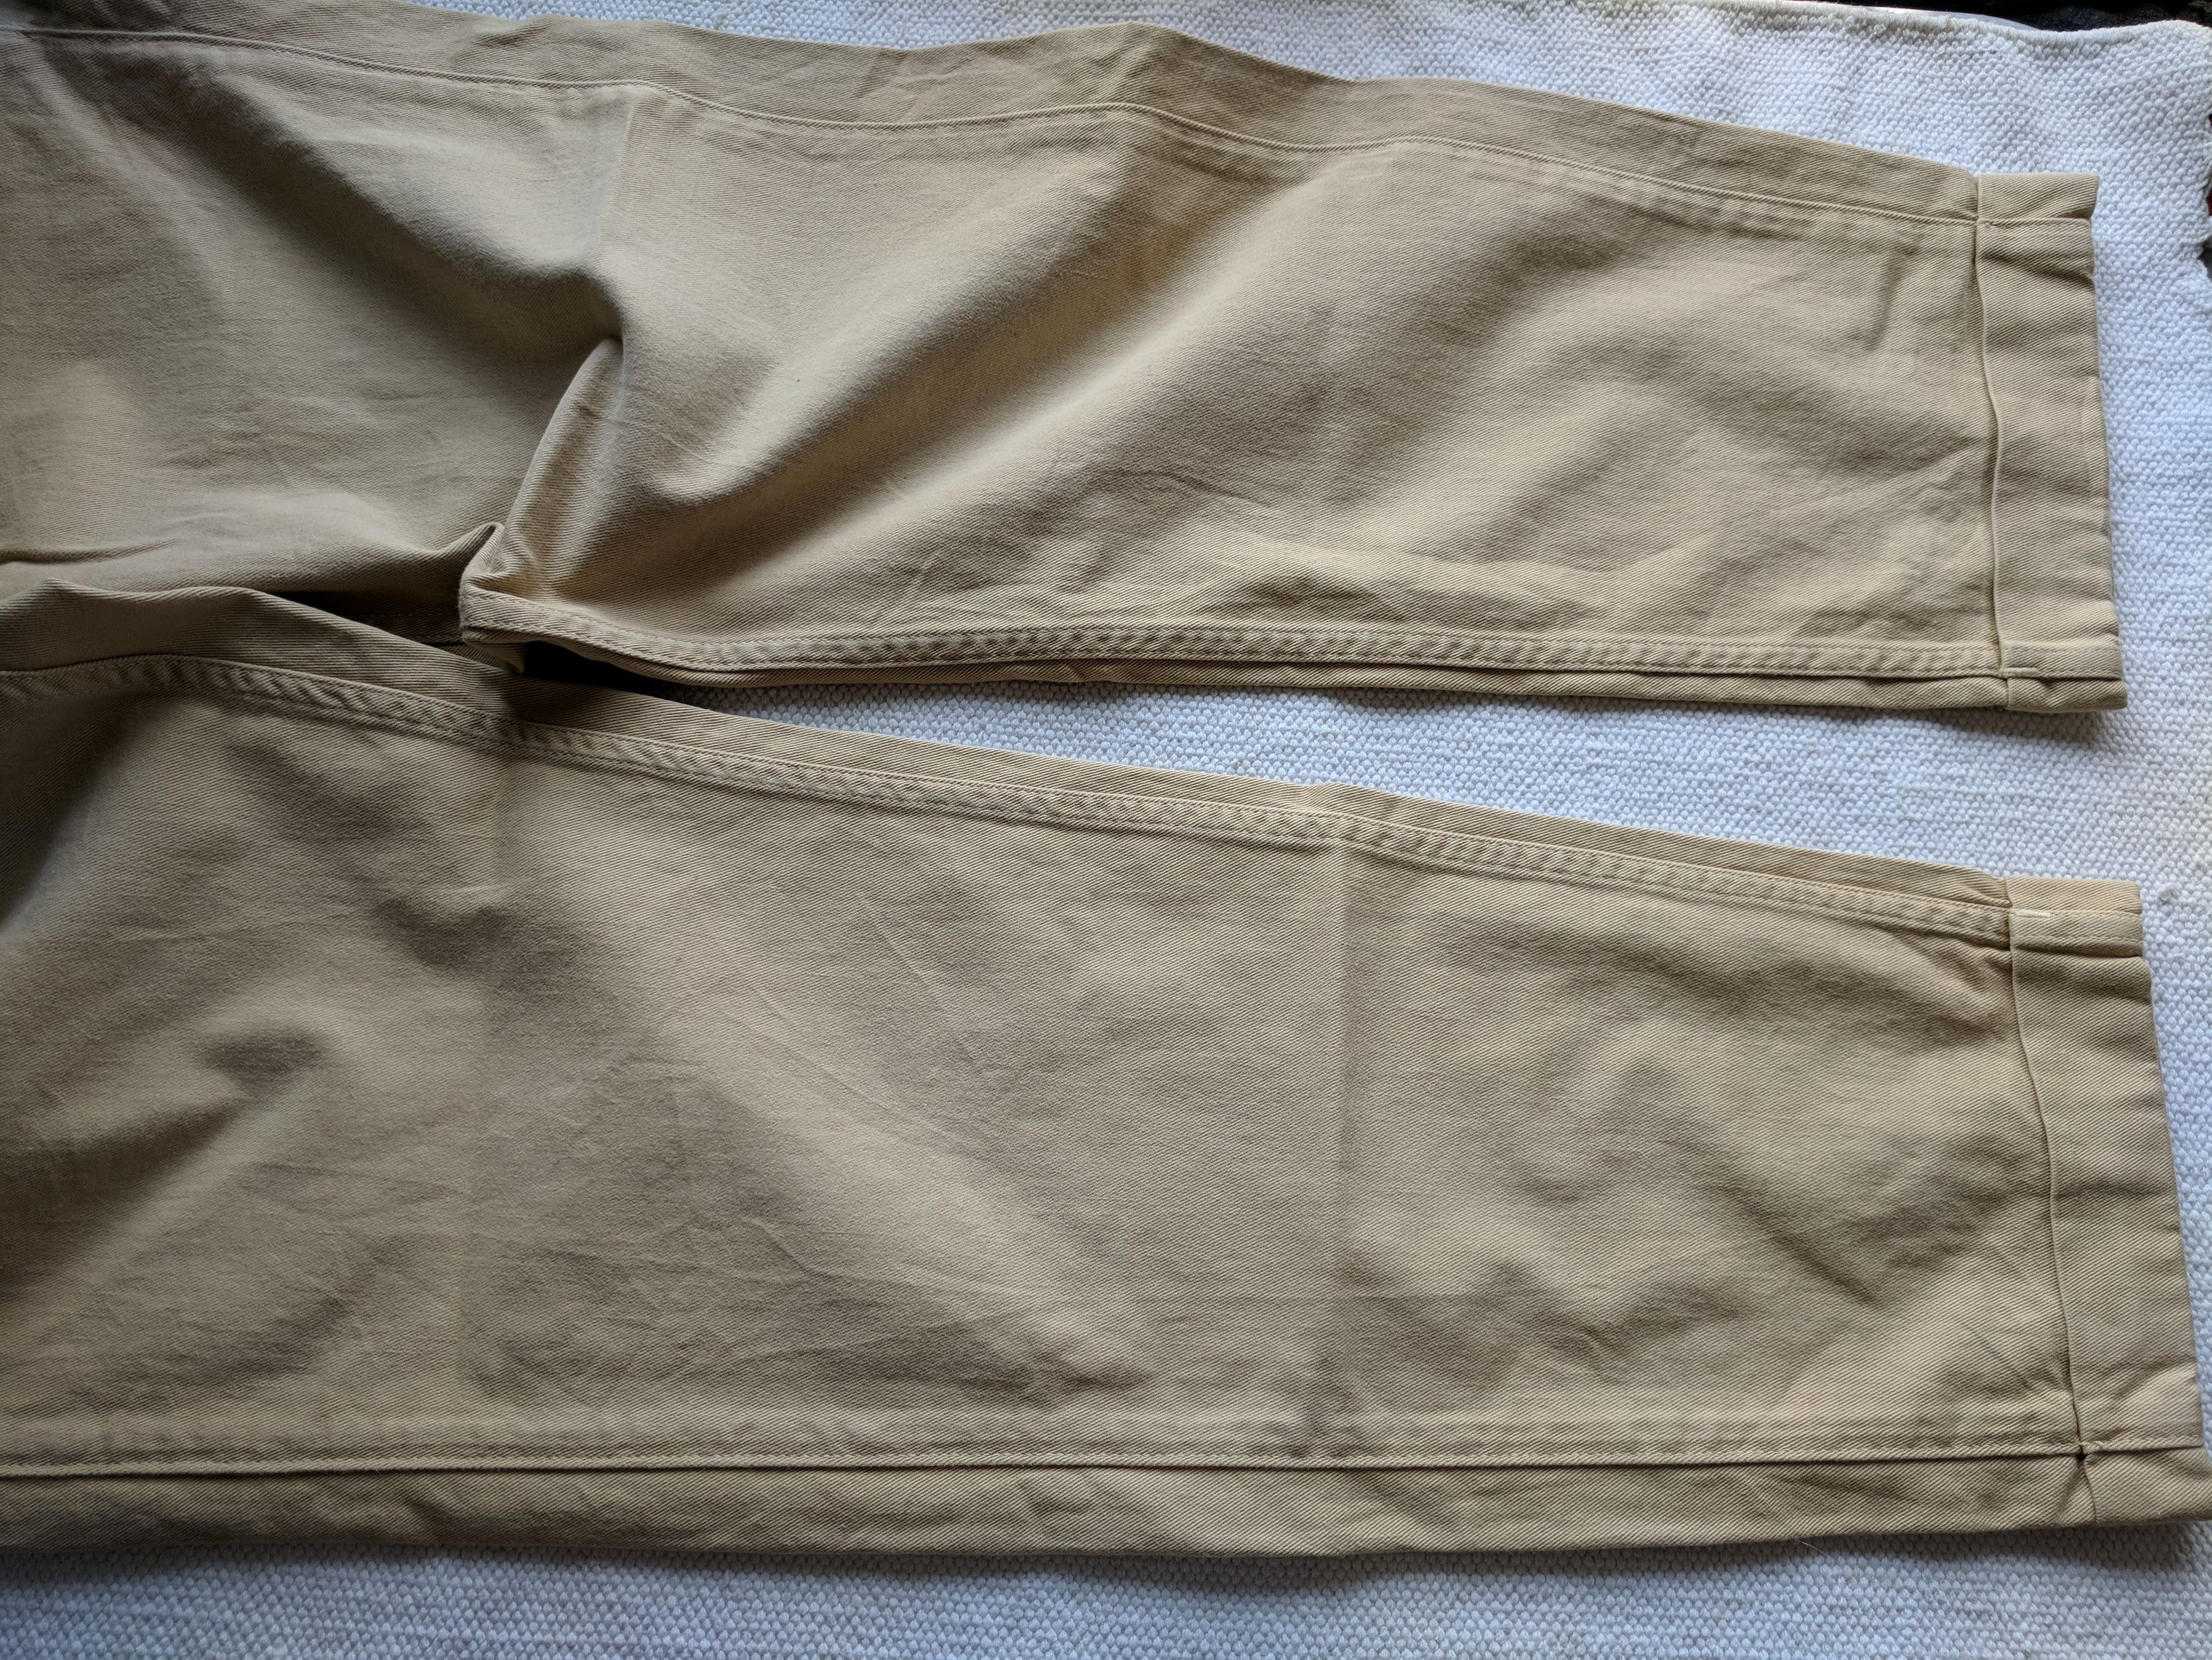 Levi's Levis LVC vintage clothing San Francisco deadstock khakis chino 1920s style pants size 29 30 Size US 29 - 14 Preview